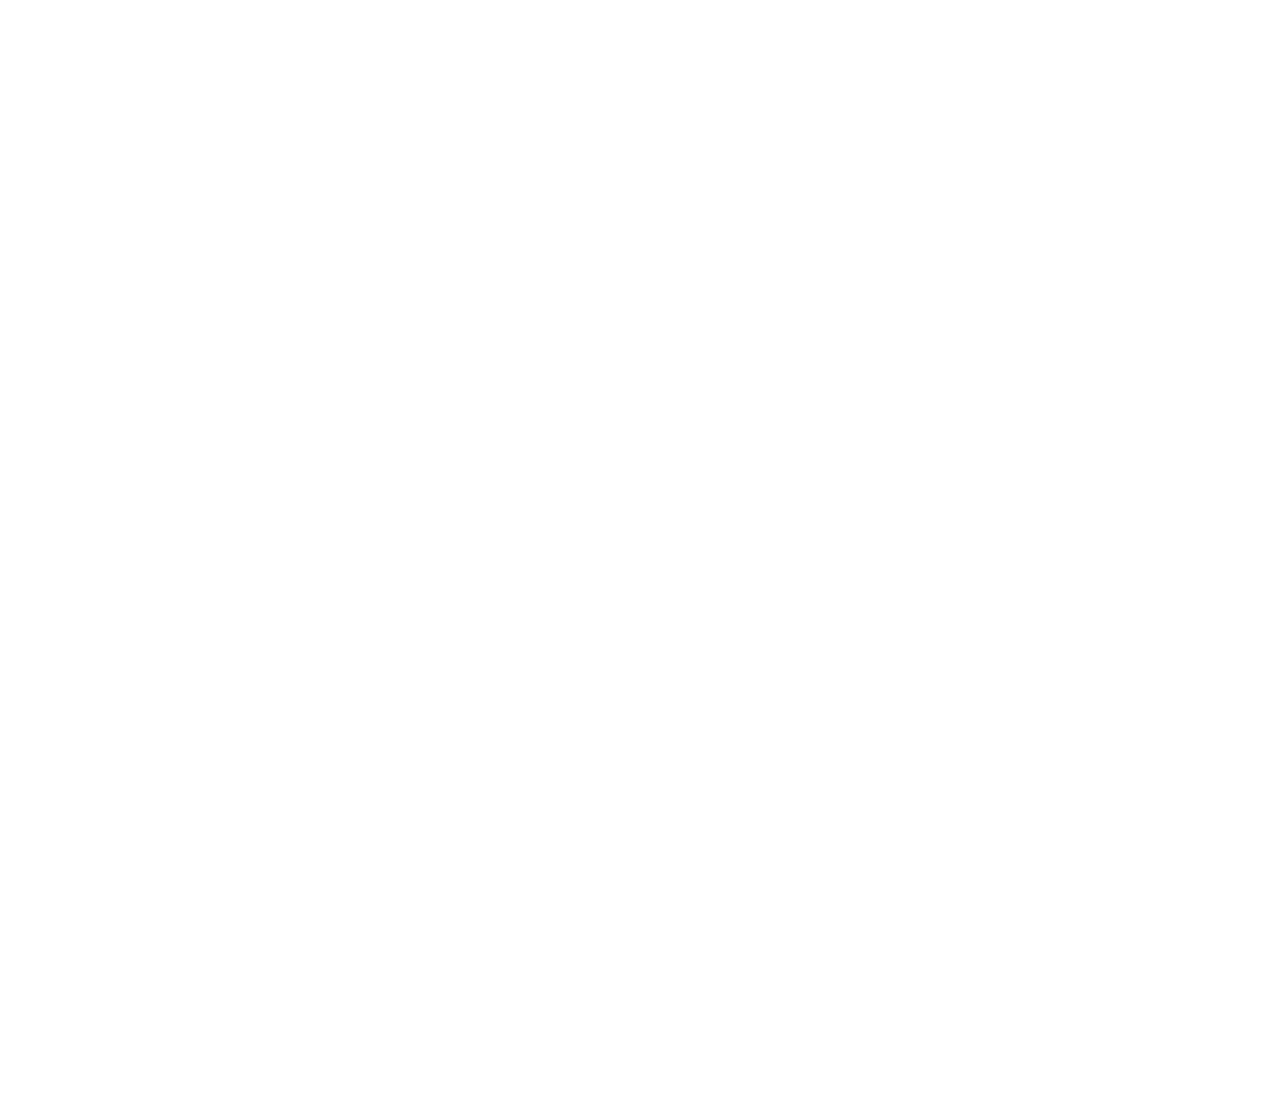 TimeWorkSpace